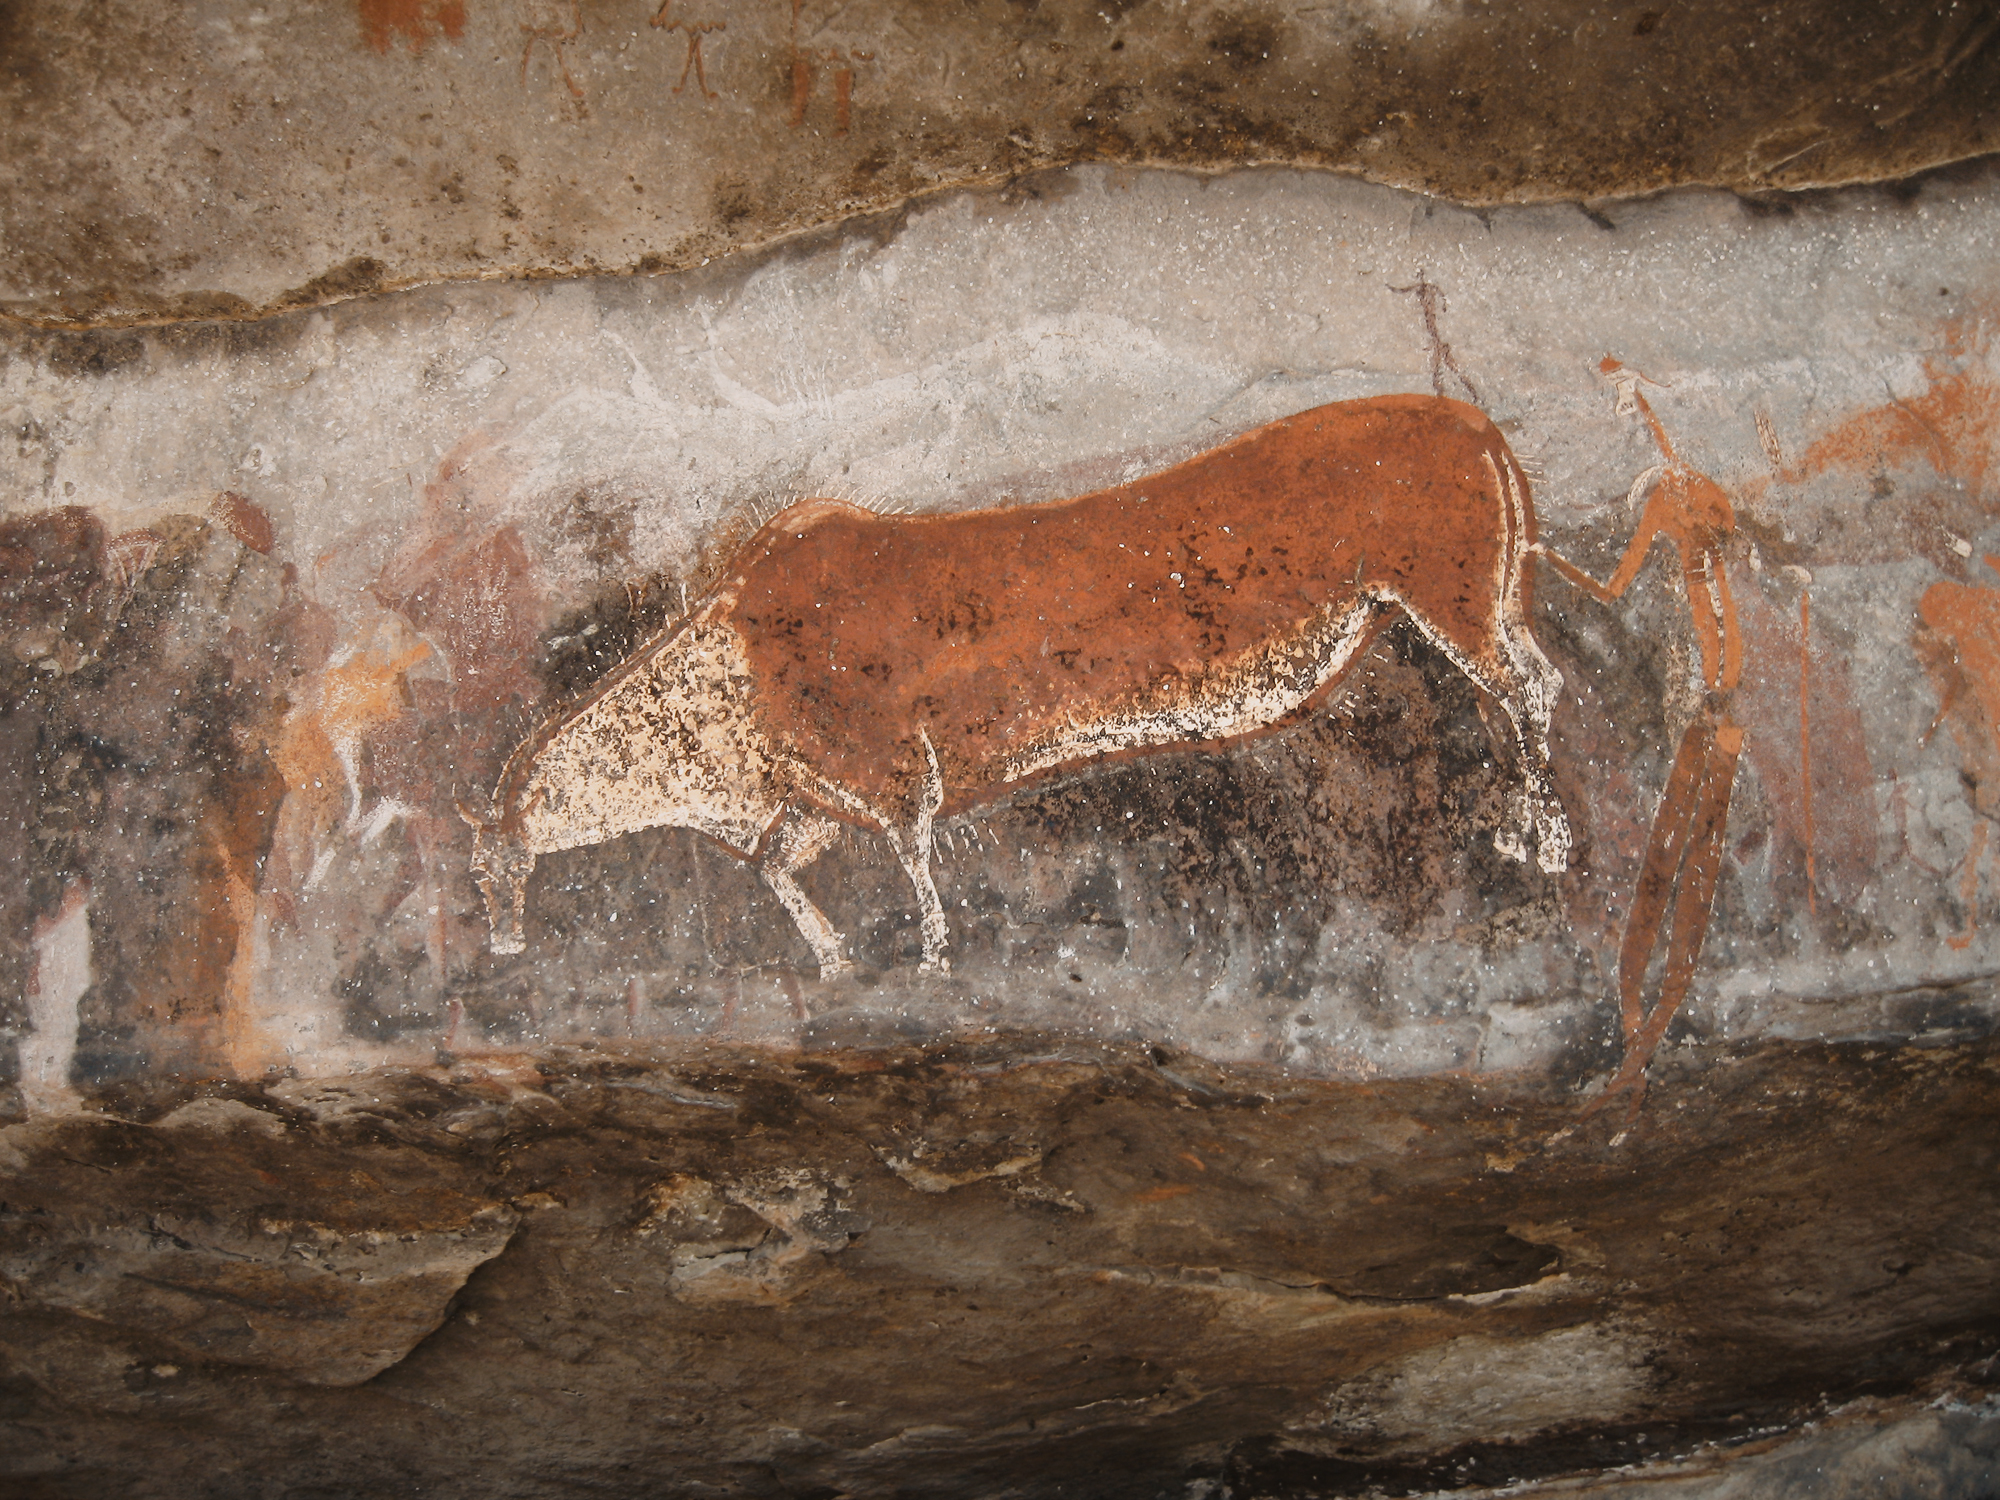 Bradshaw Foundation San Bushmen Rock Art Paintings Africa African Shamans Shaman religious spirit world journeys